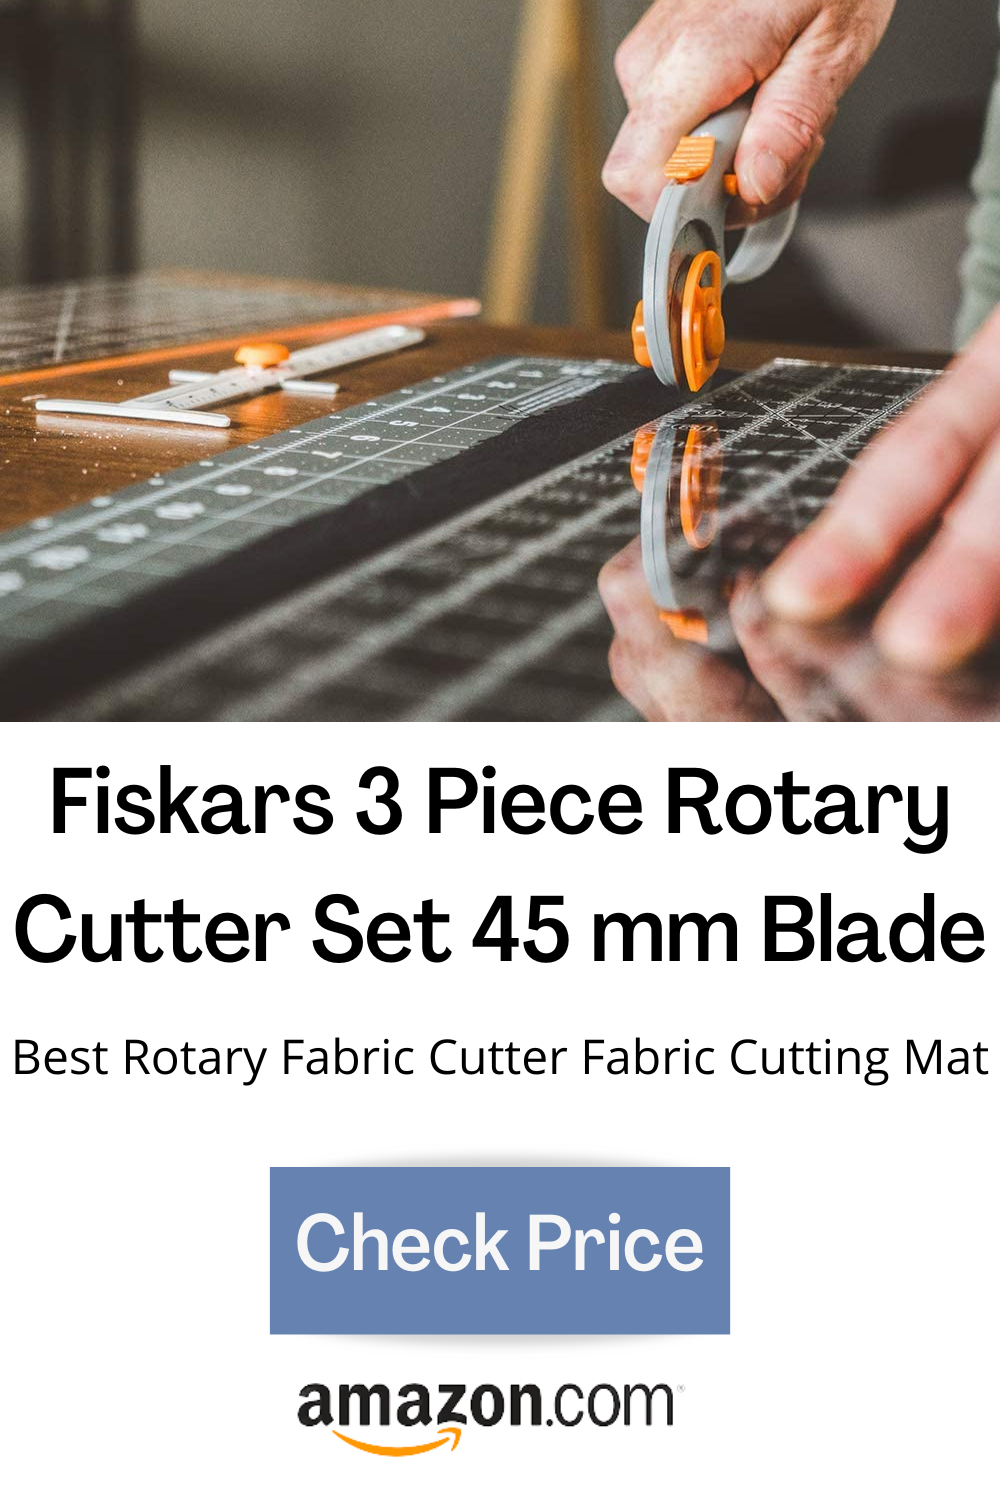 Fiskars Home Decor Sewing Fashion Starter Set 3pcs-Rotary Cutter